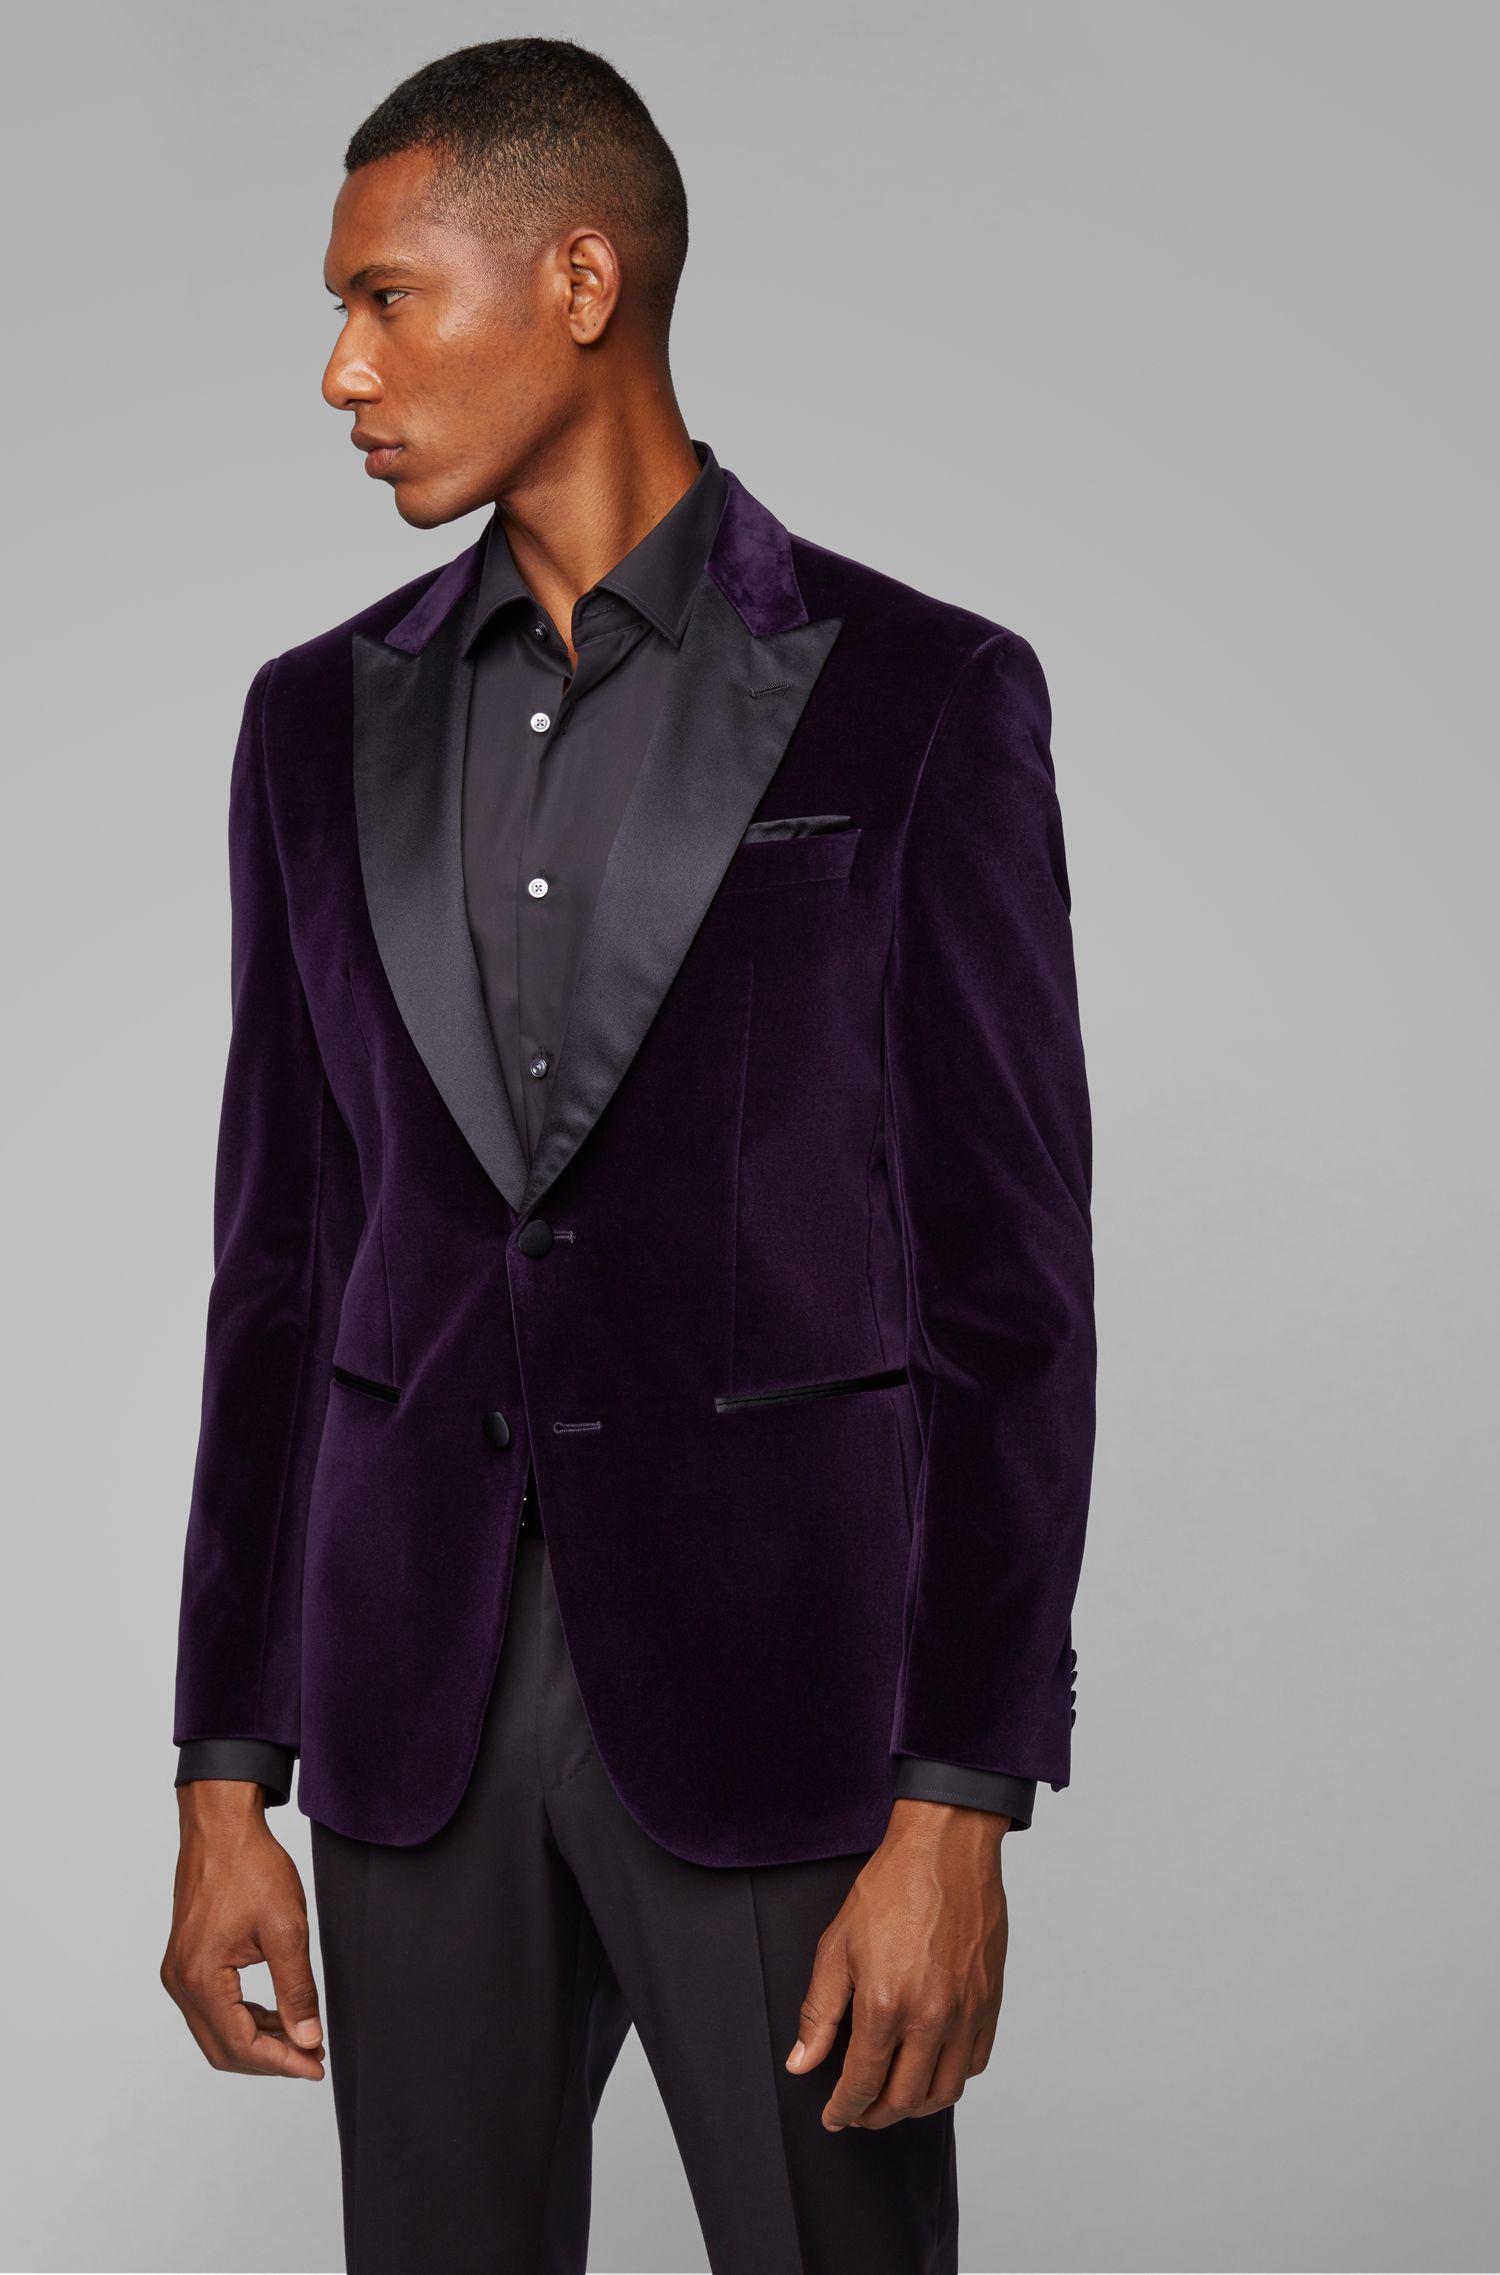 hugo boss purple suit